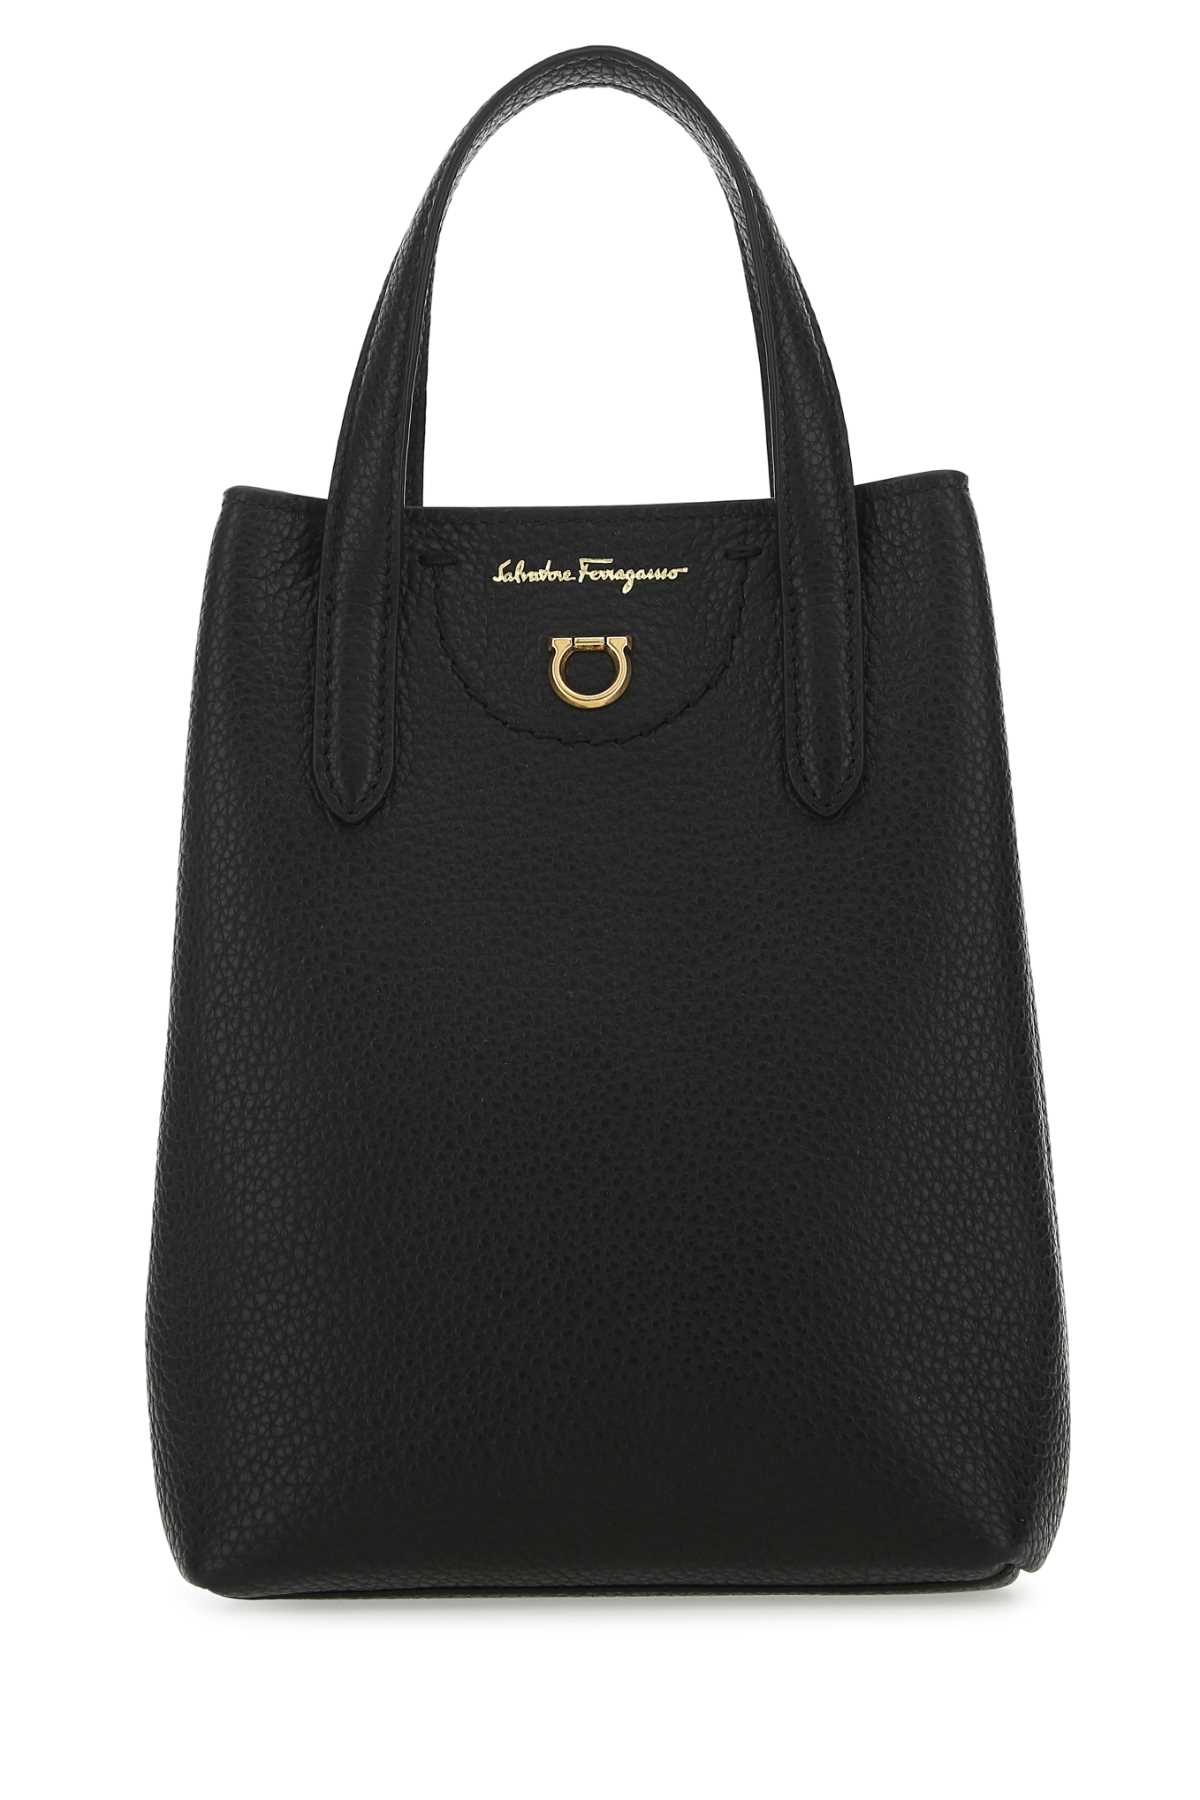 Black Leather Travel Handbag